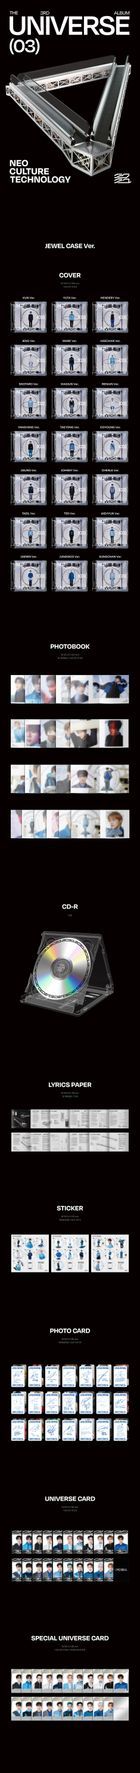 NCT Vol. 3 - Universe (Jewel Case Version) (Ten Version)